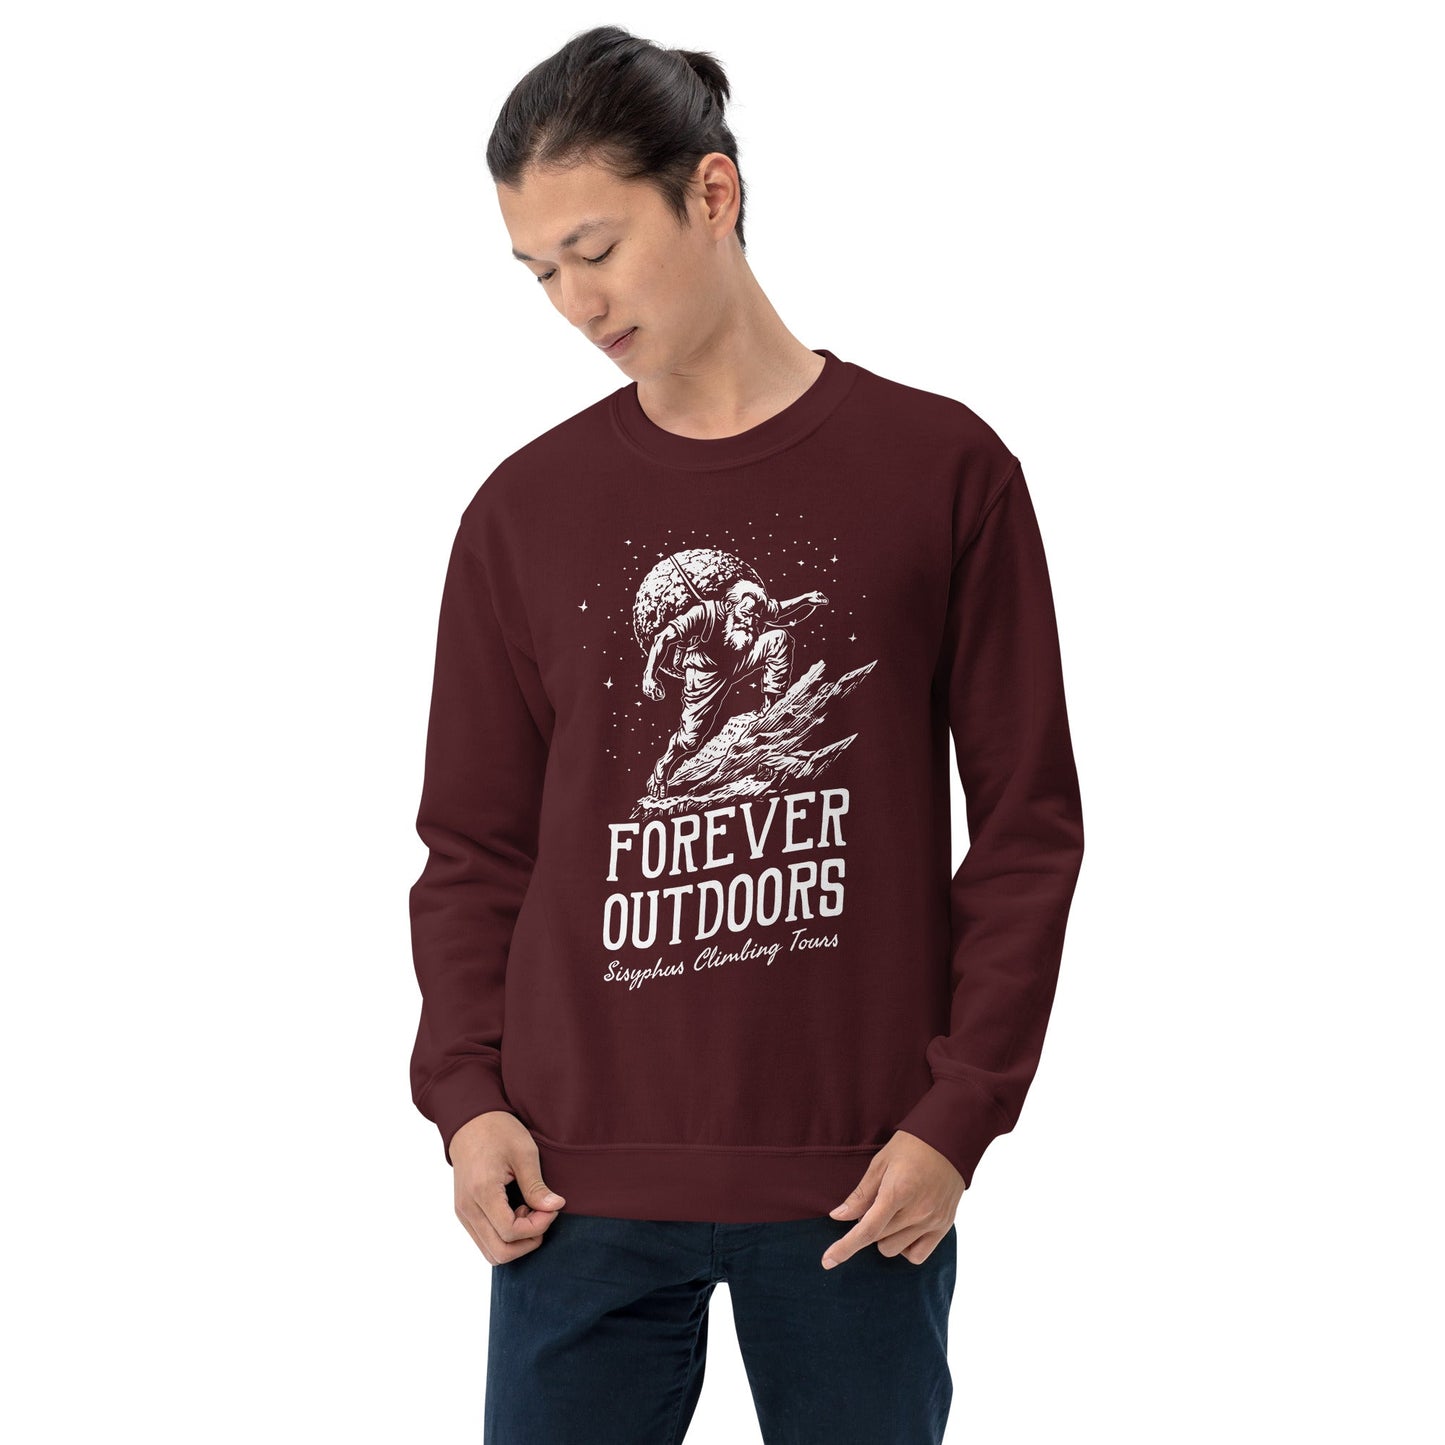 Forever Outdoors - Sisyphus Climbing Tours - Sweatshirt